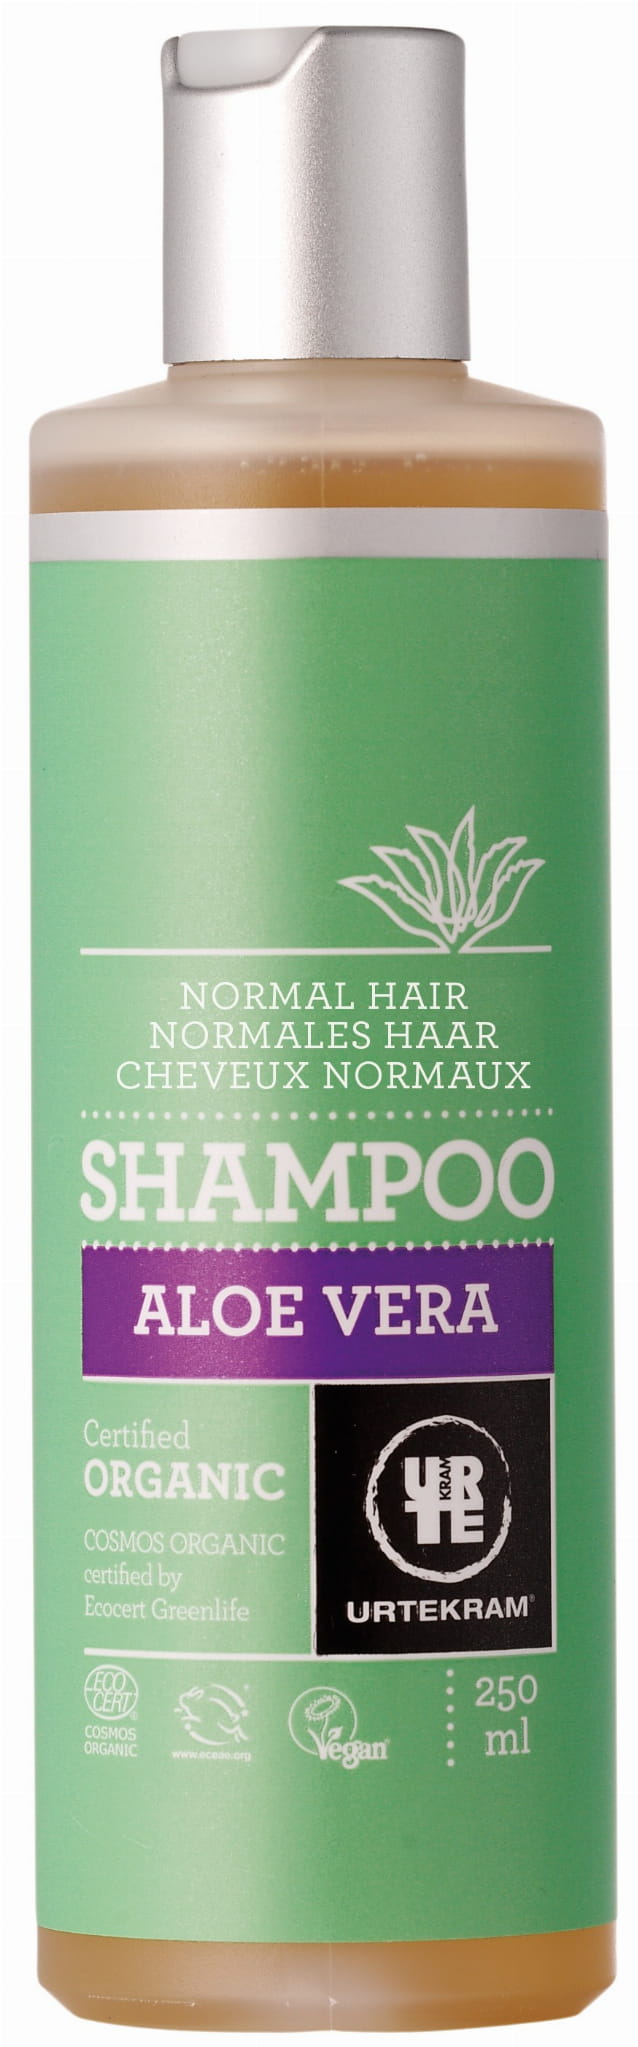 Aloe Vera Shampoo für normales Haar 250 ml EKO - URTEKRAM